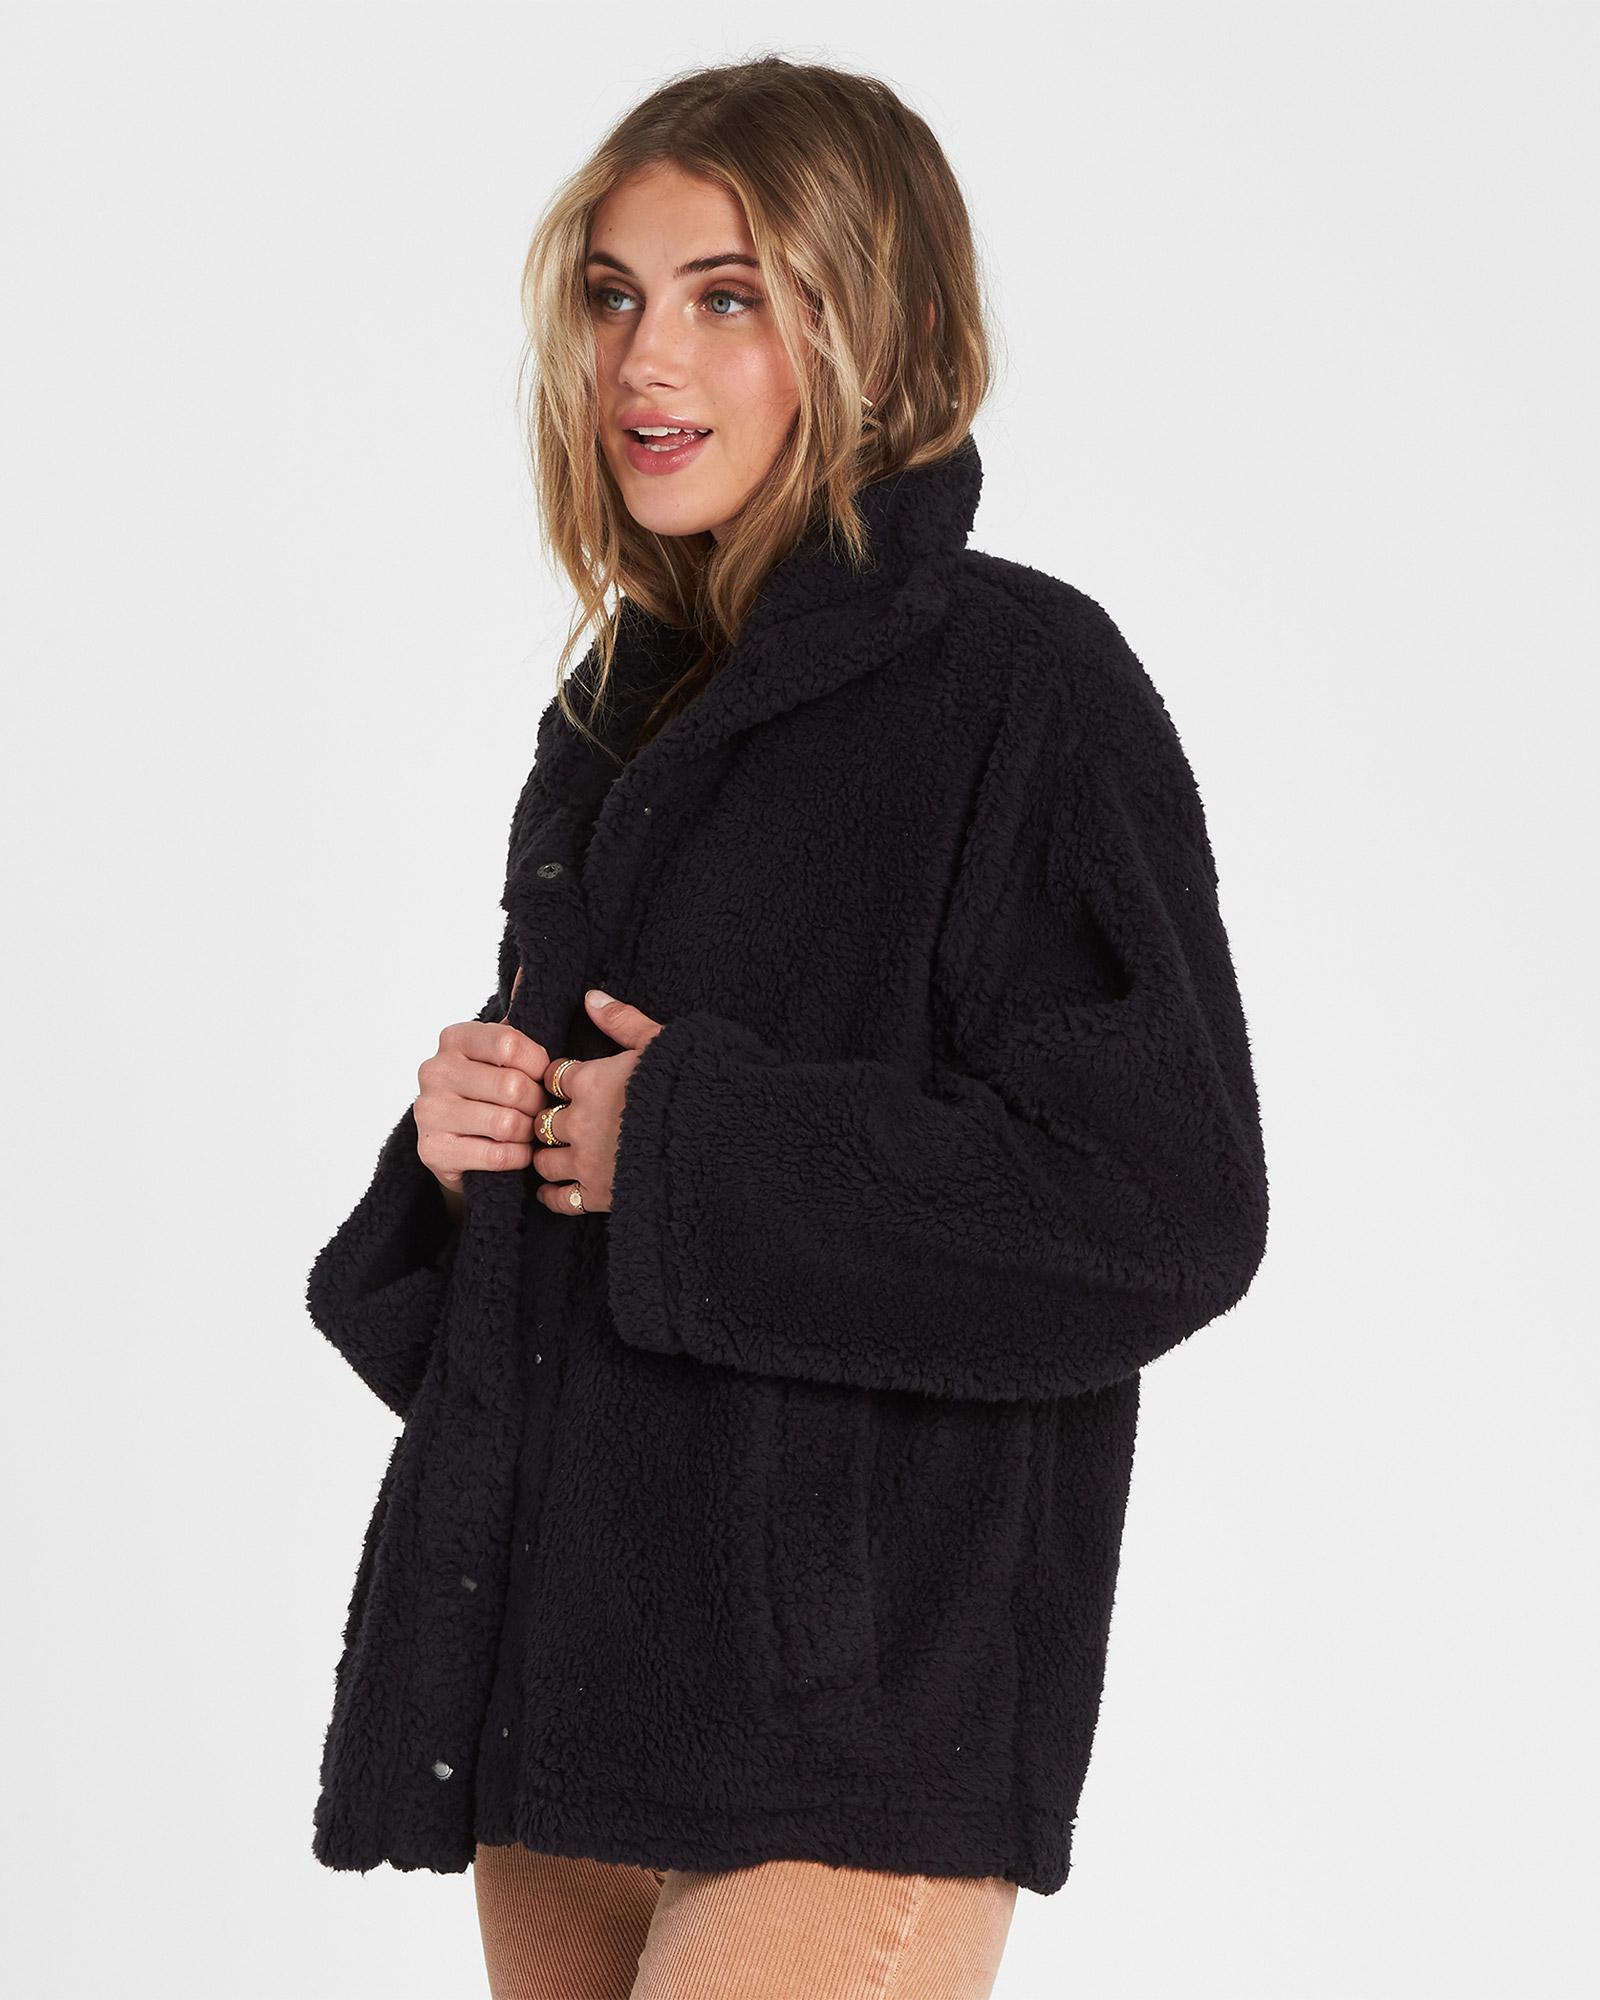 Lyst - Billabong Cozy Days Fleece Jacket in Black